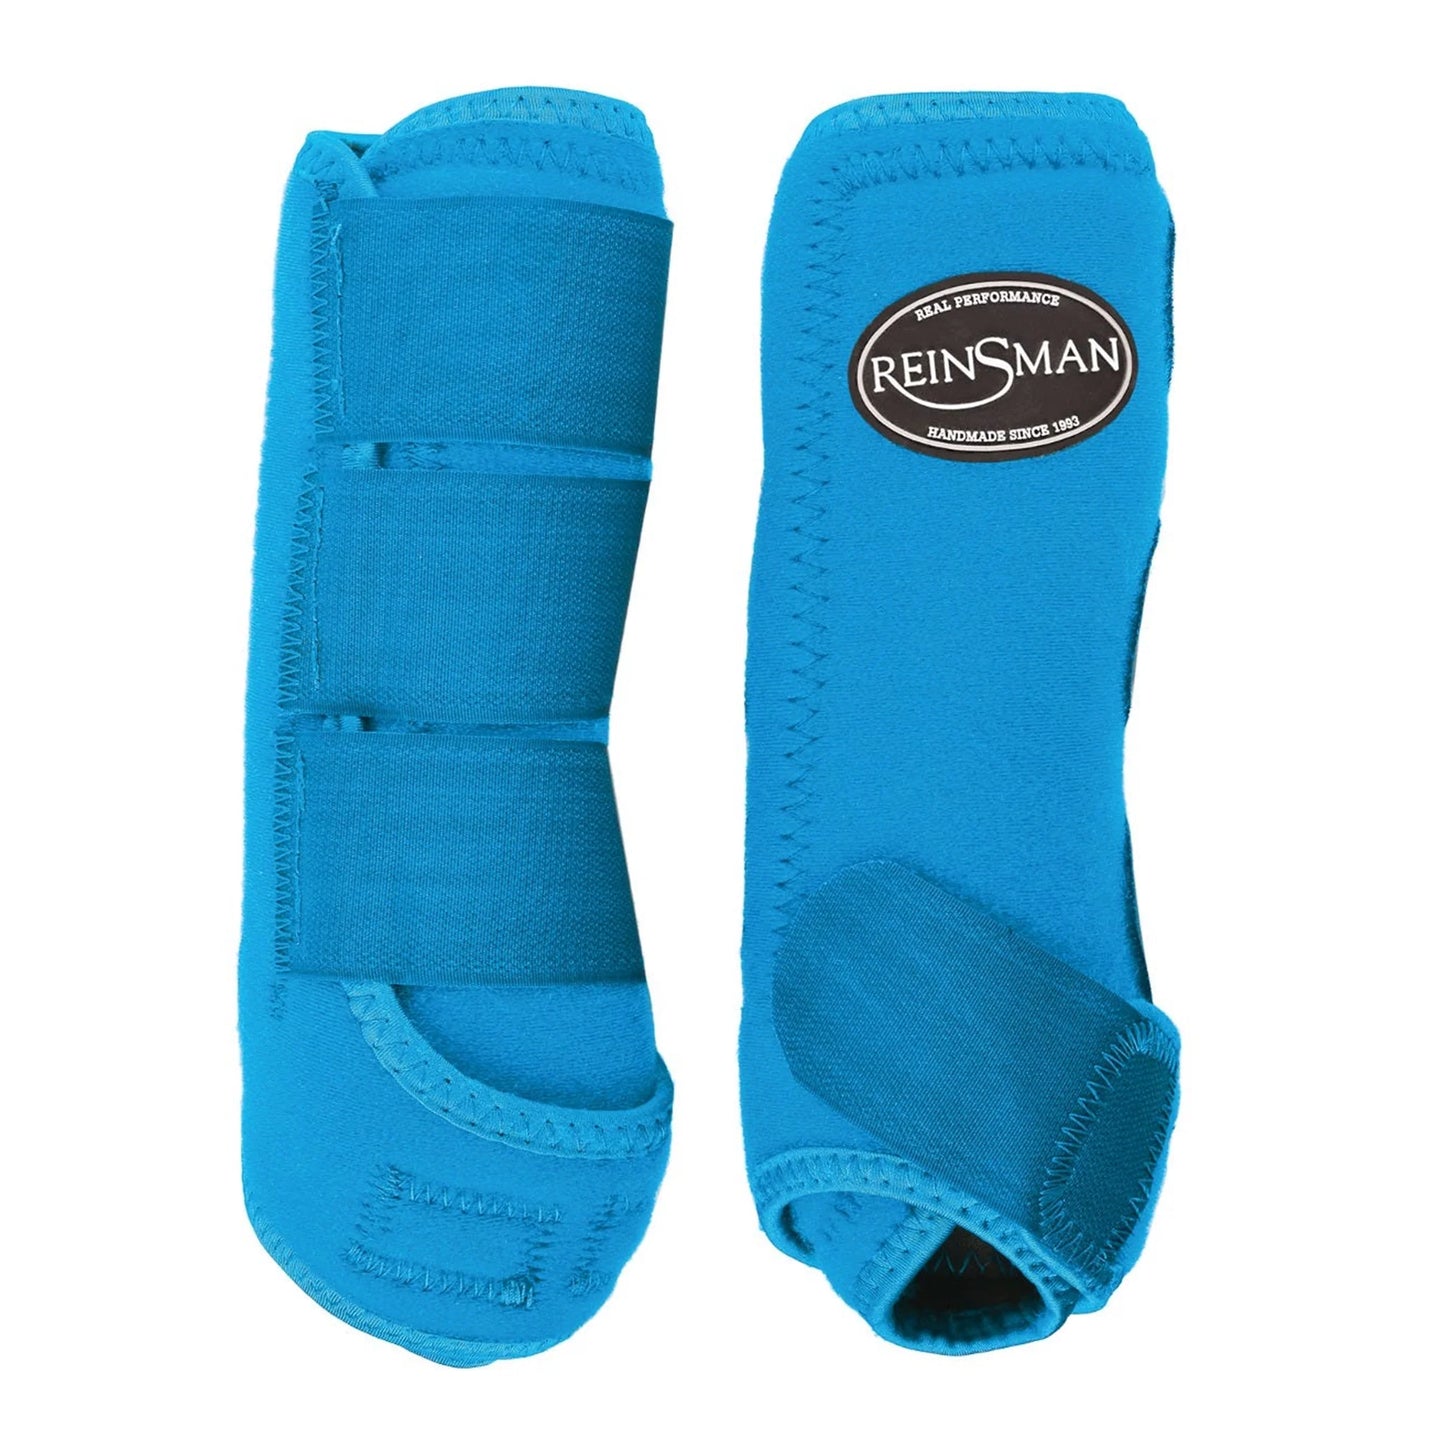 Reinsman Apex Sports Boots 2 Pack - Turquoise - Medium - CYRE9126TQ-M